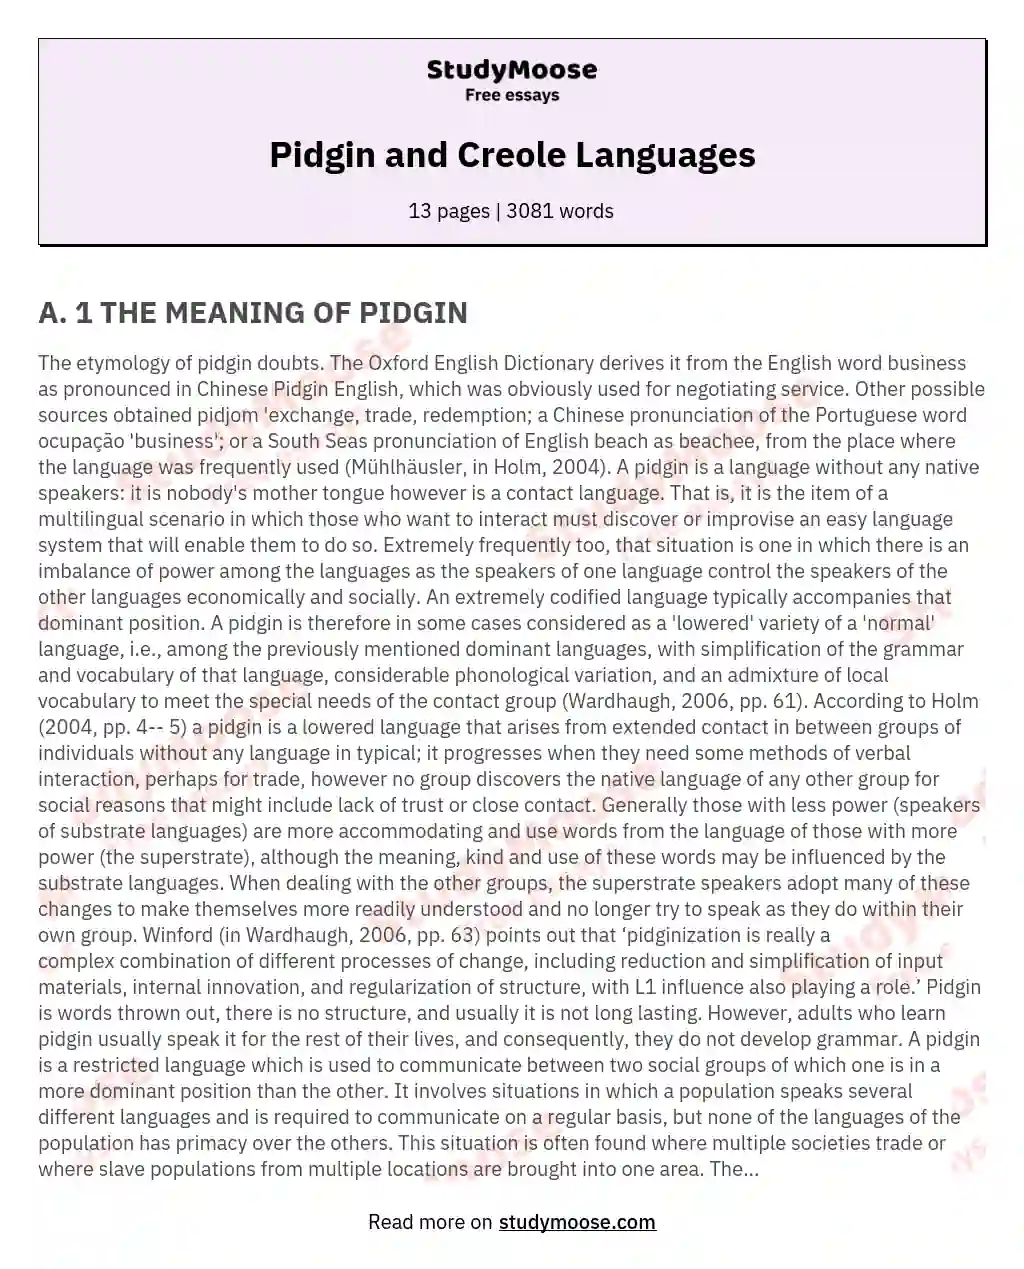 Pidgin and Creole Languages essay